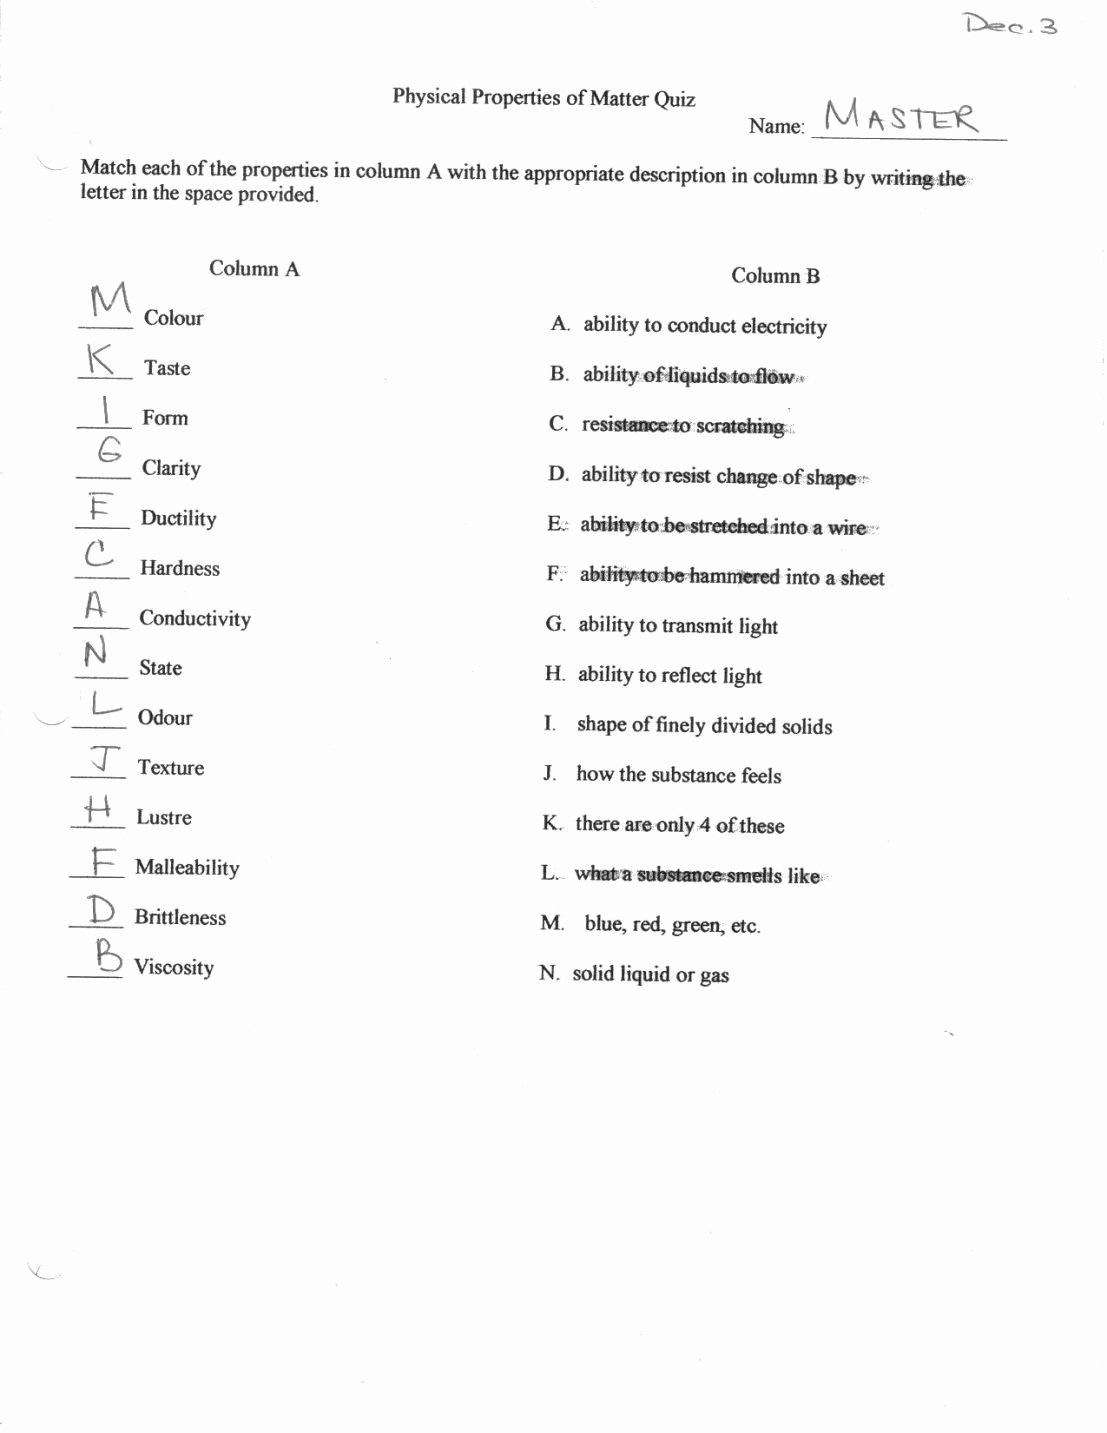 Classification Of Matter Worksheet